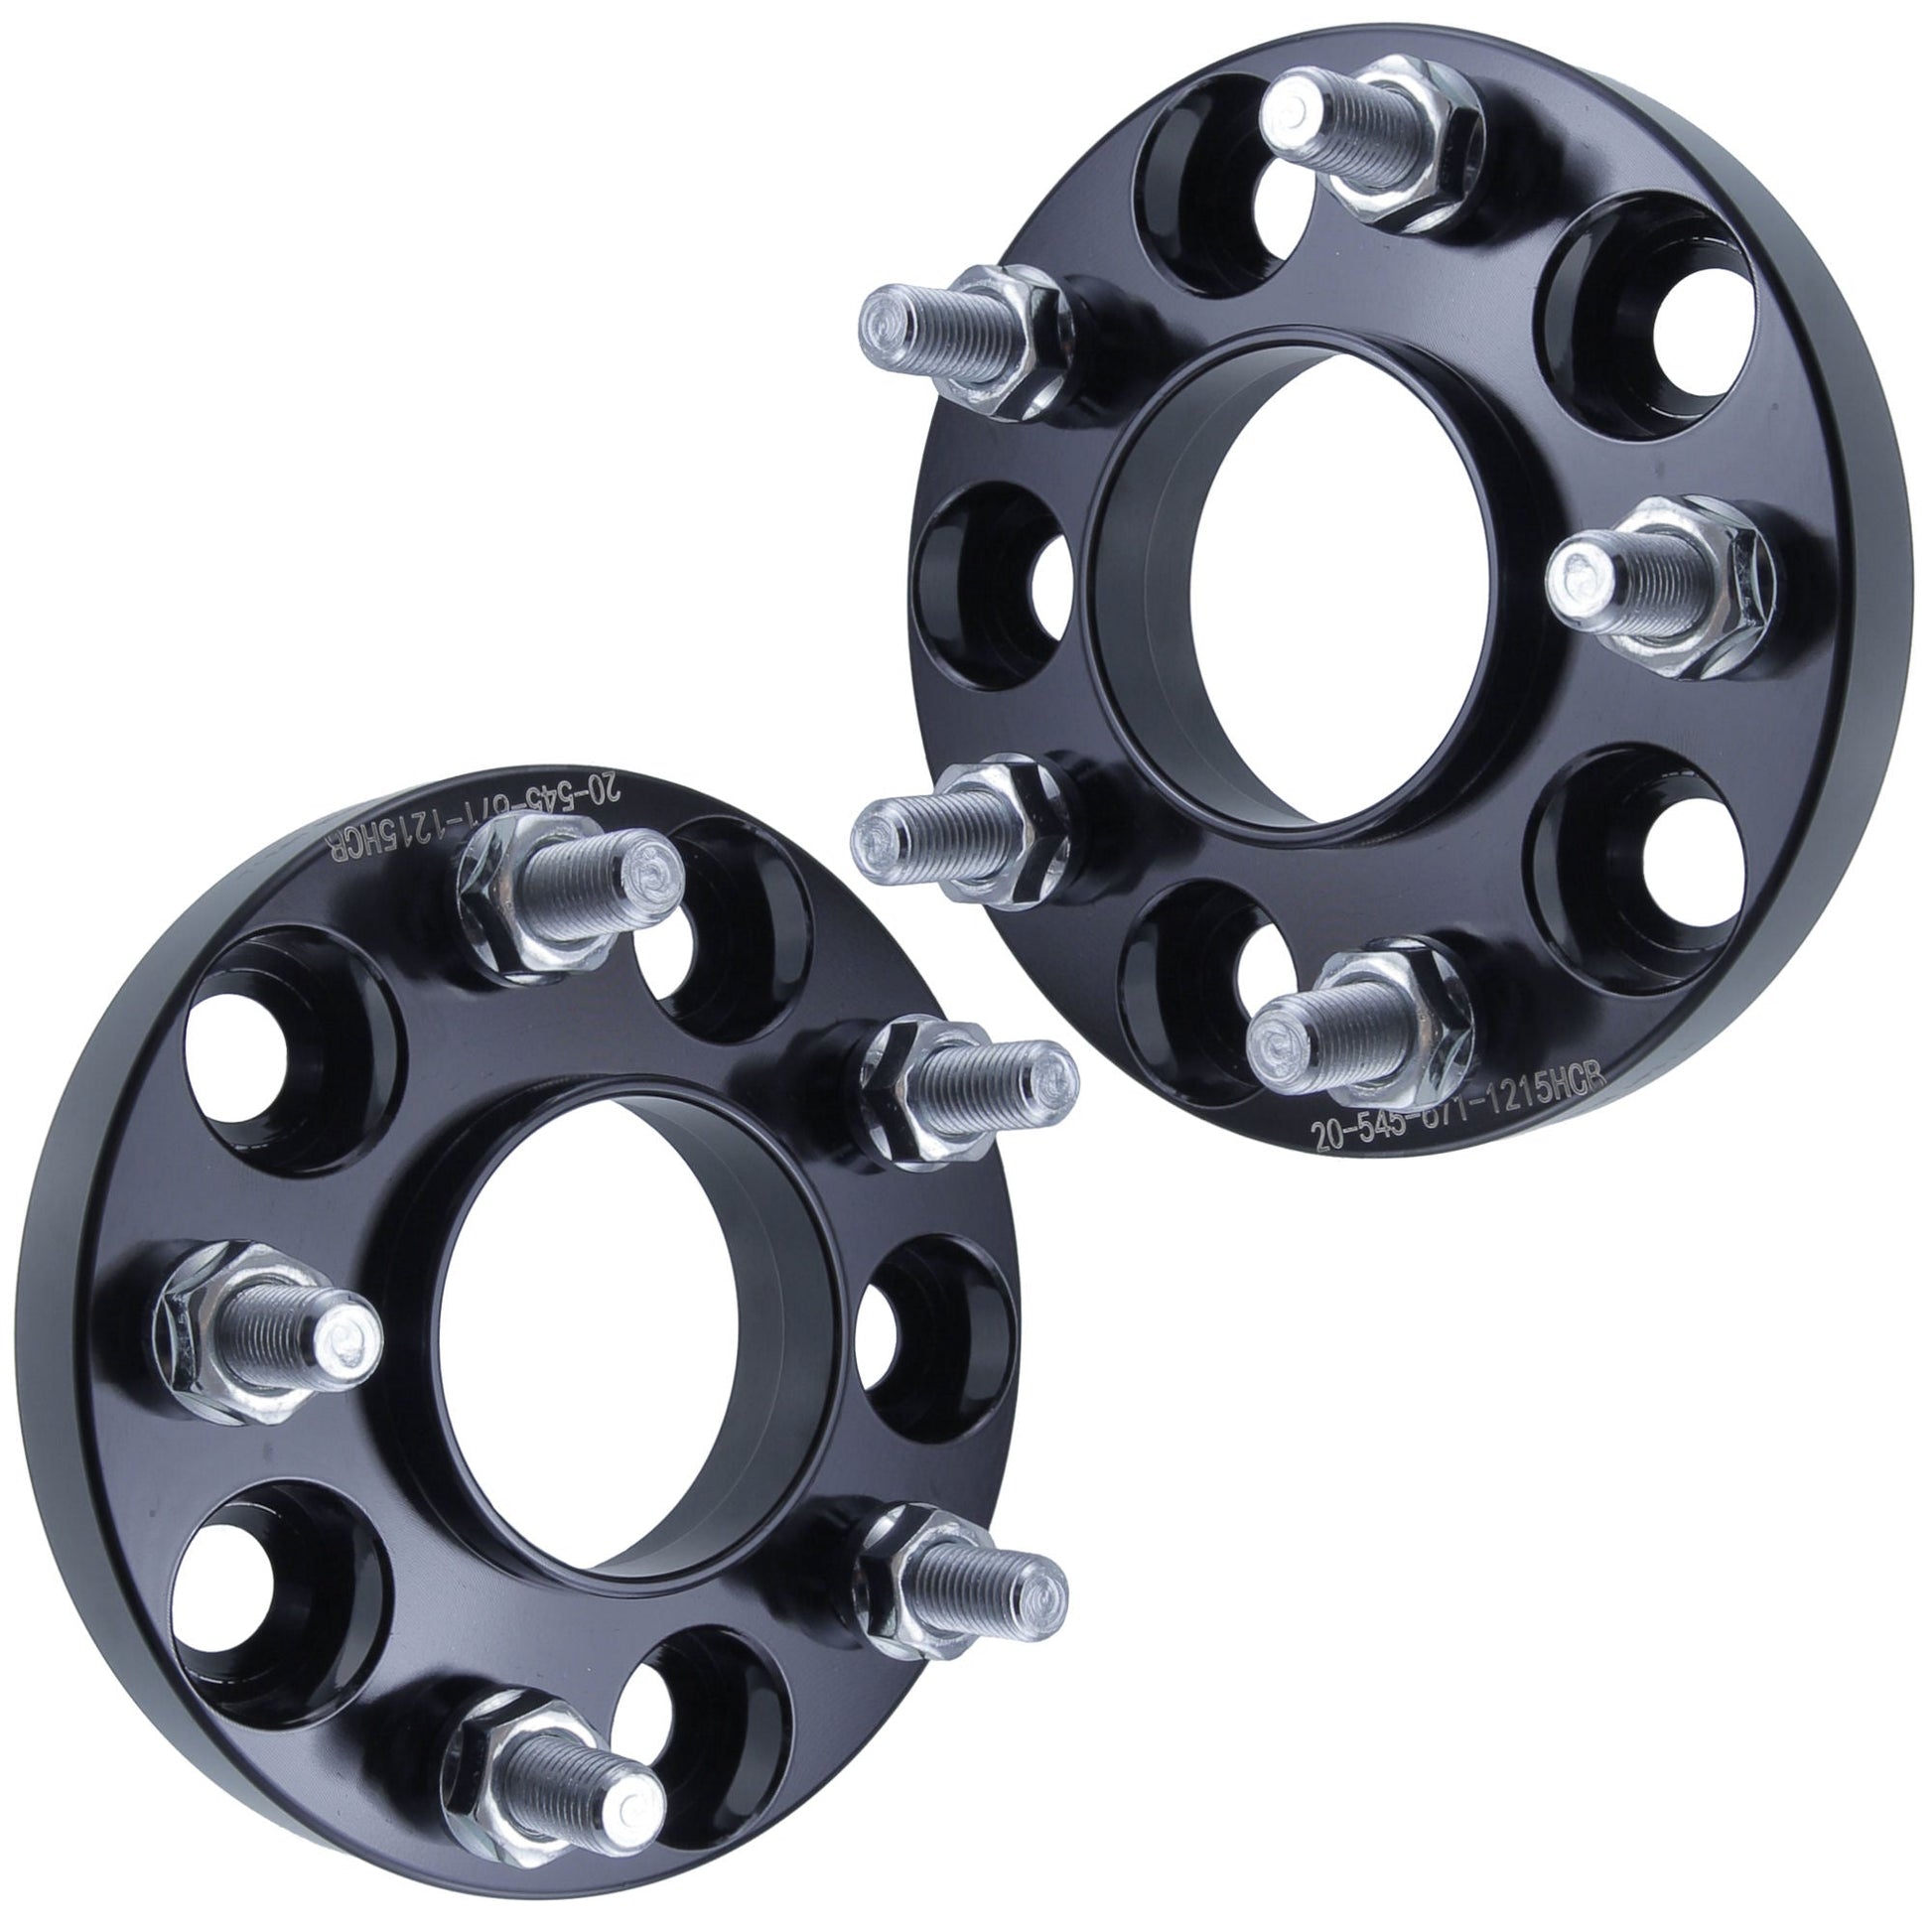 20mm Titan Wheel Spacers for Mitsubishi Lancer Evo | 5x114.3 (5x4.5) | 67.1 Hubcentric |12x1.5 Studs |  Set of 4 | Titan Wheel Accessories